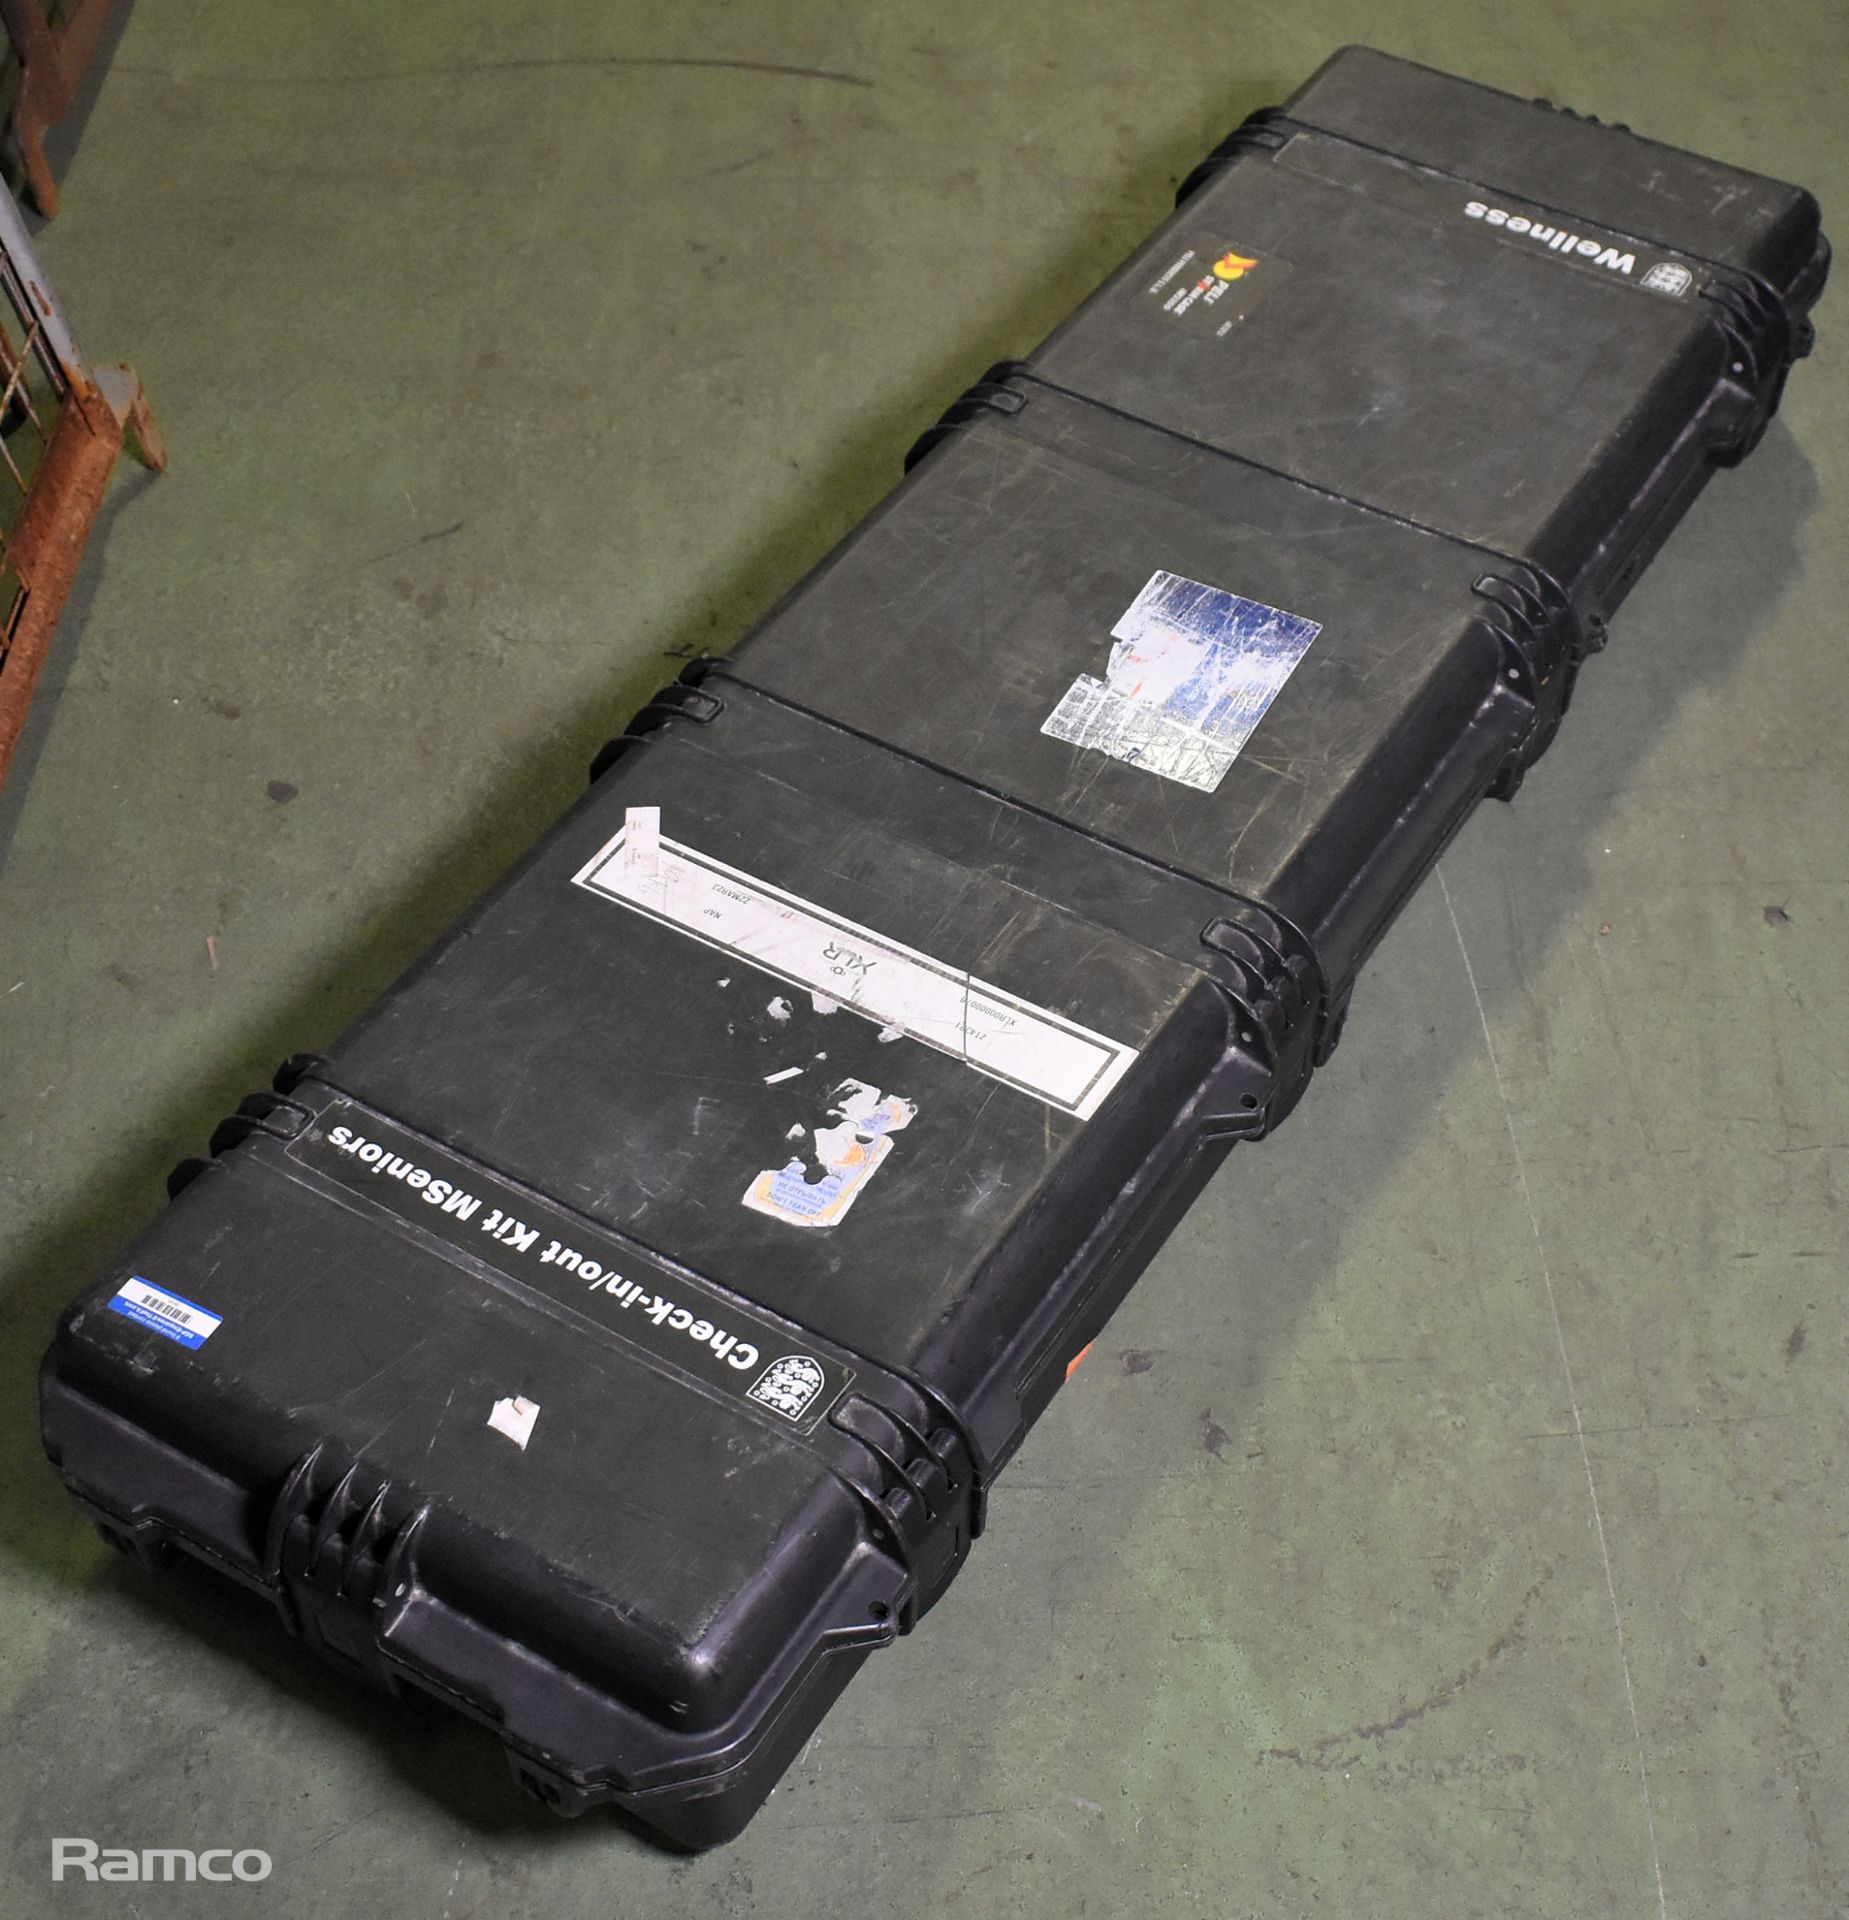 Storage units - 12x black plastic storage bin, banner display case, Peli flat shipping case - Image 7 of 11